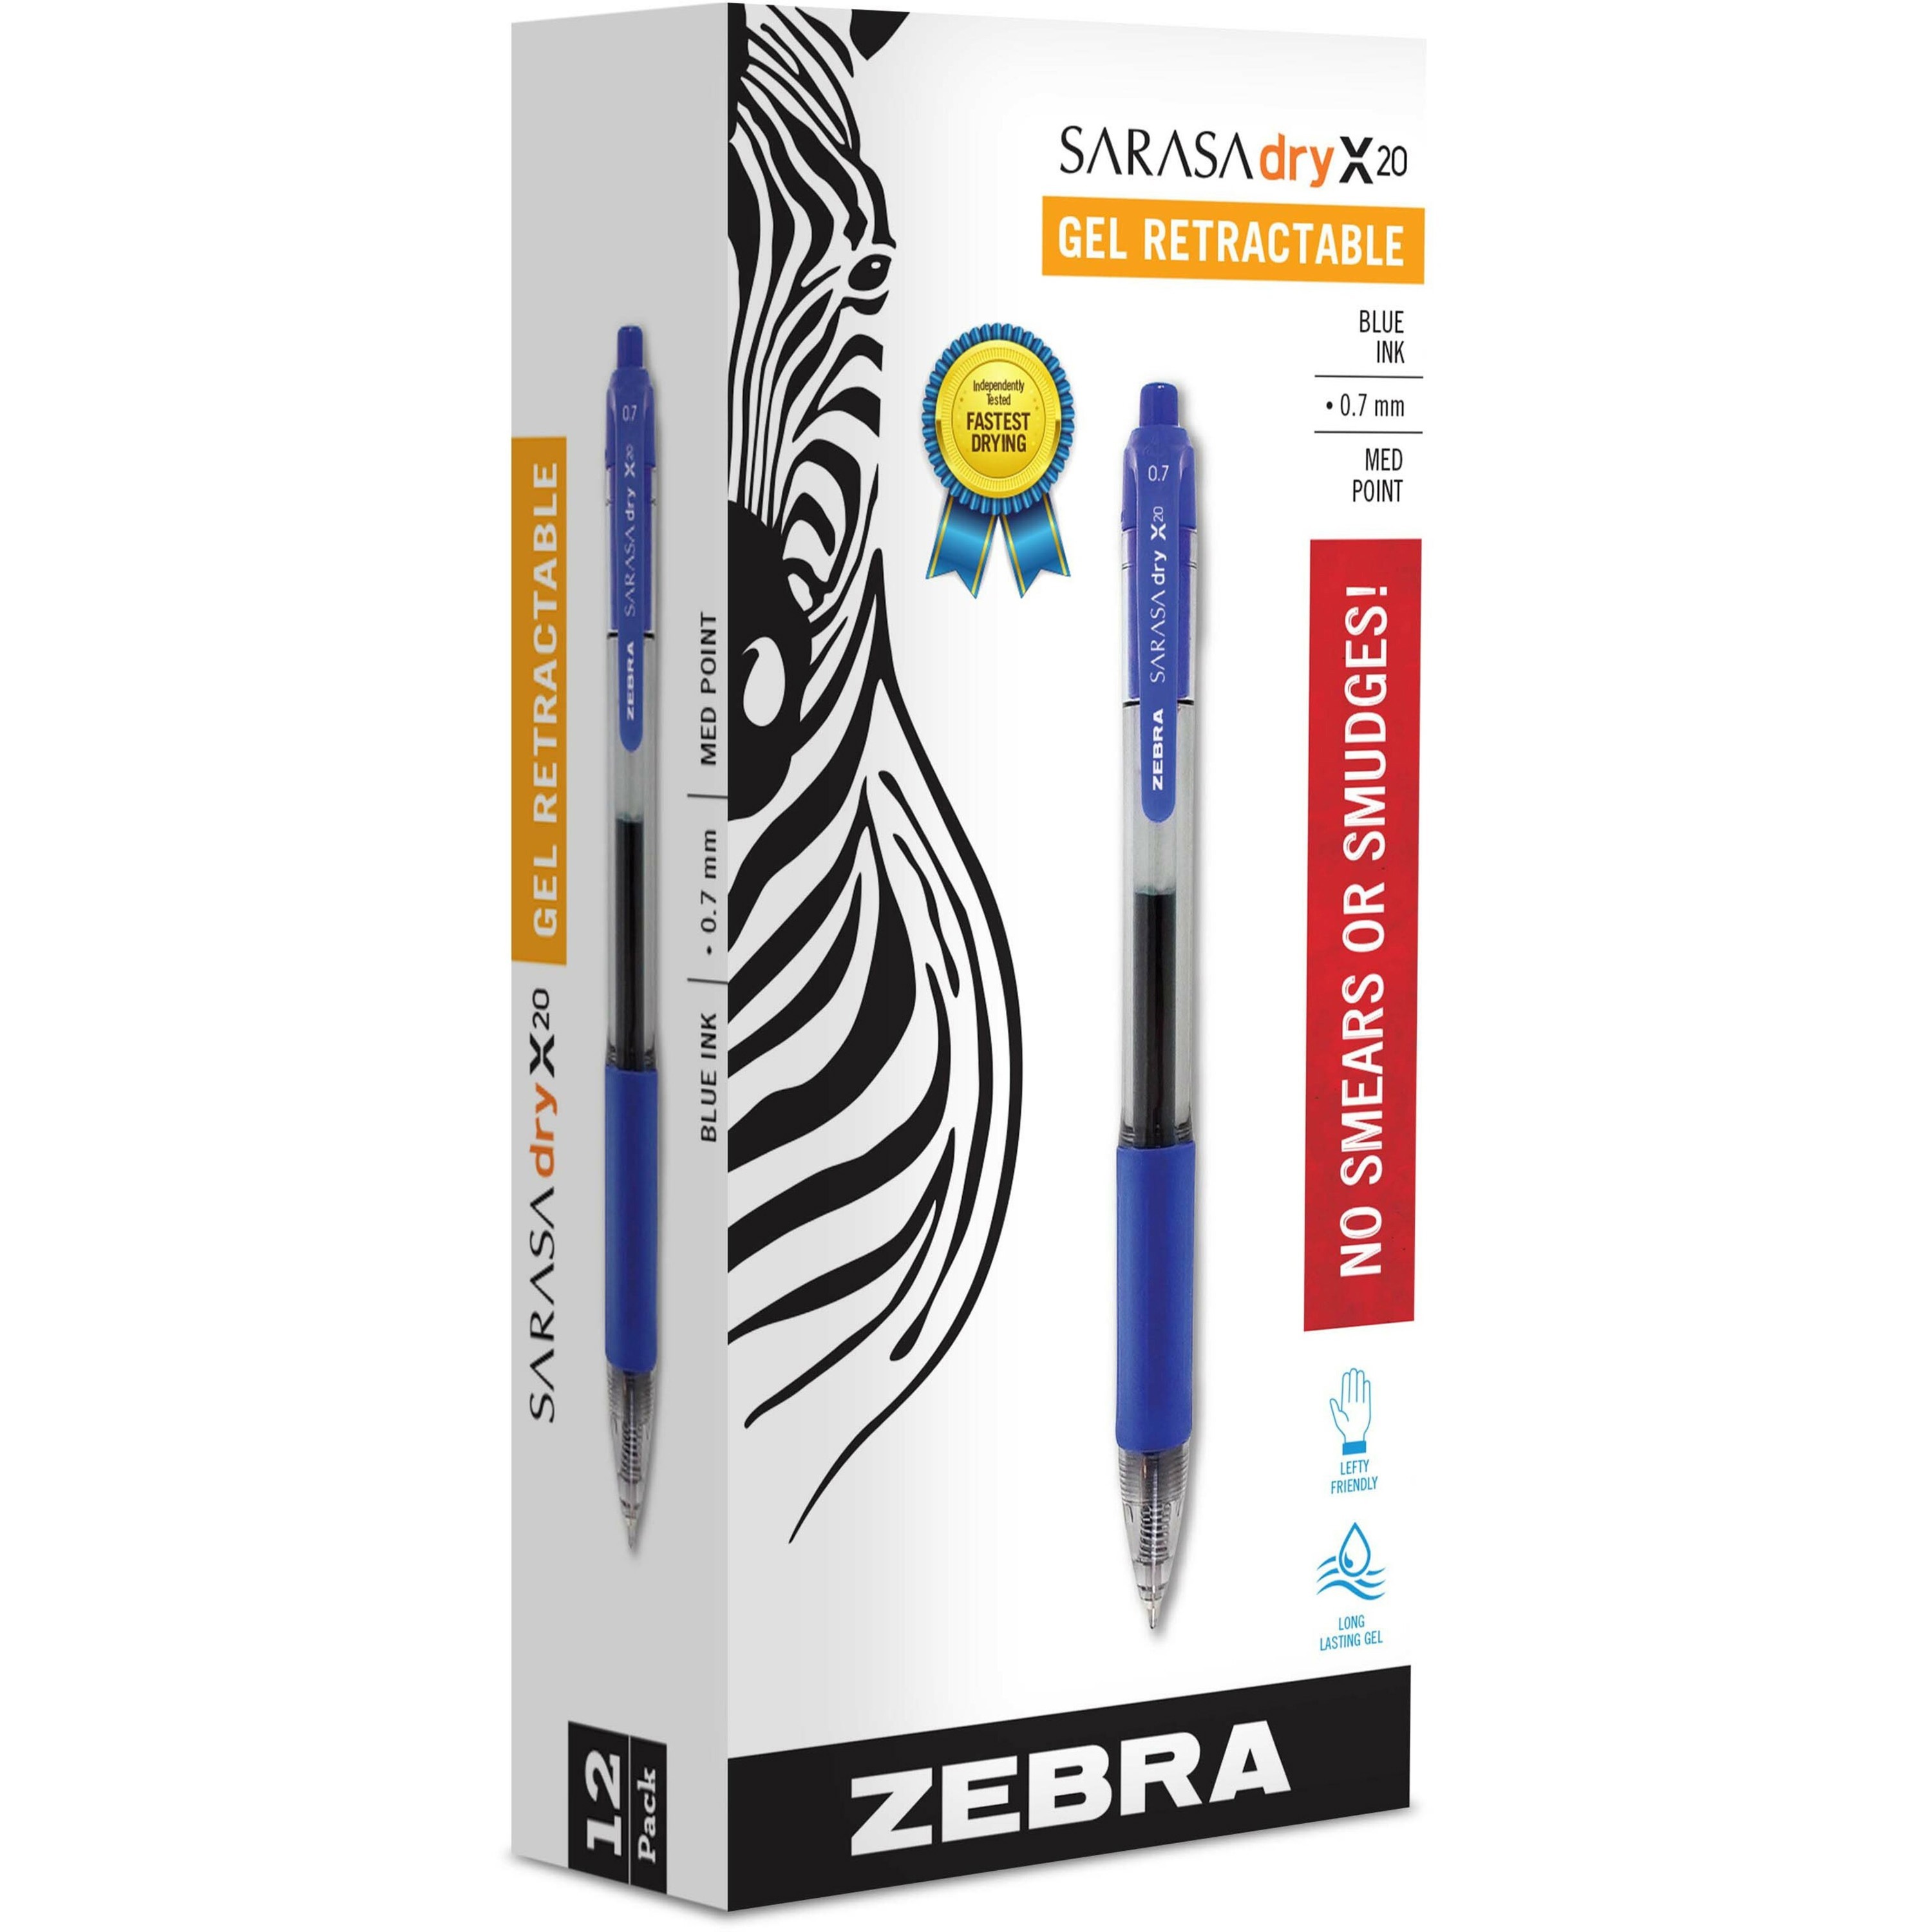 Zebra SARASA dry X20 Retractable Gel Pen - Medium Pen Point - 0.7 mm Pen  Point Size - Refillable - Retractable - Blue Pigment-based Ink -  Translucent